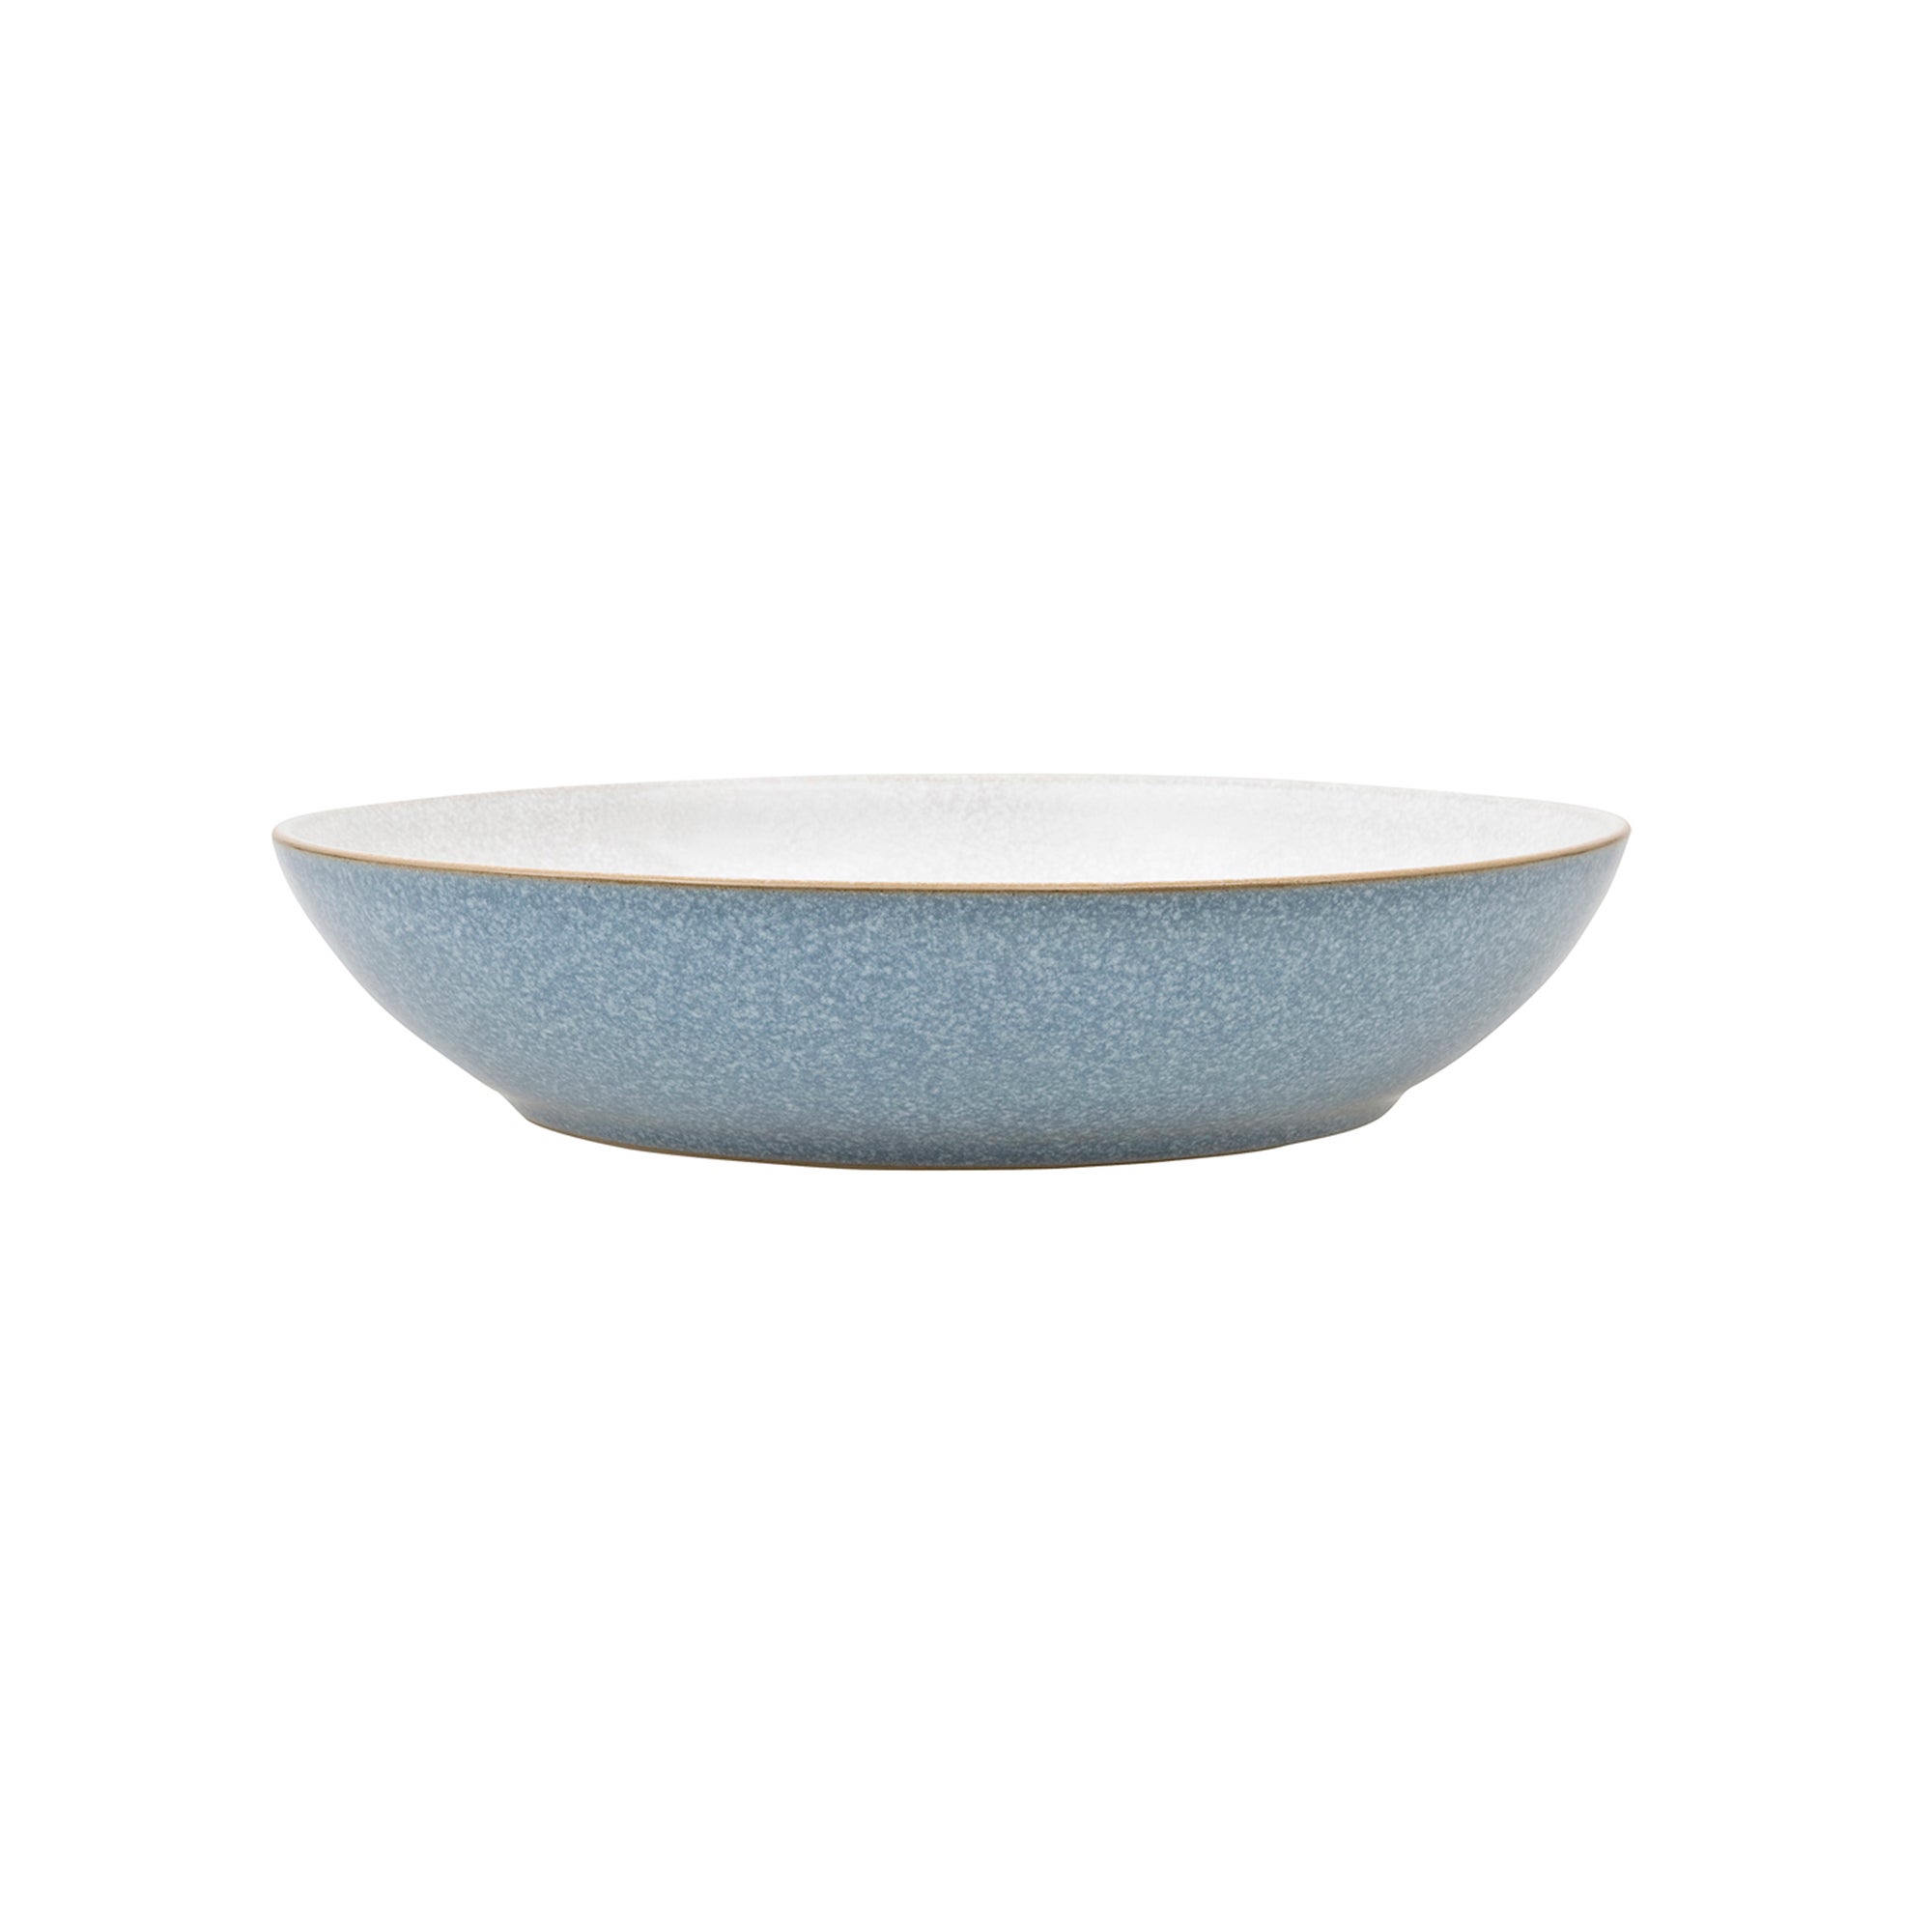 Denby Elements Blue Stoneware Pasta Bowl